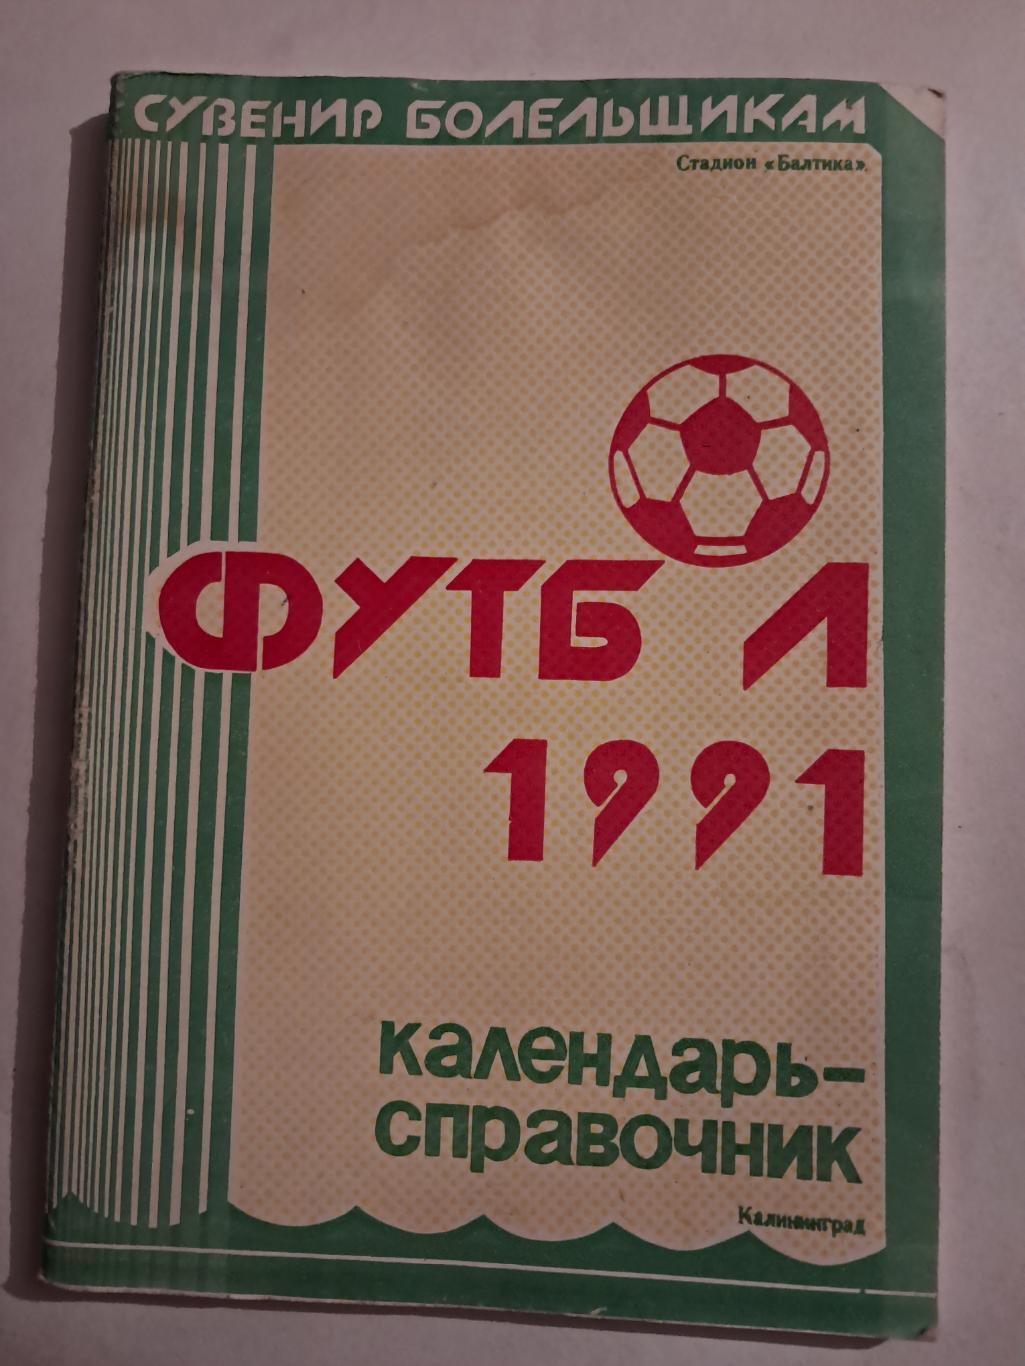 Календарь-справочник по футболу 1991 Калининград